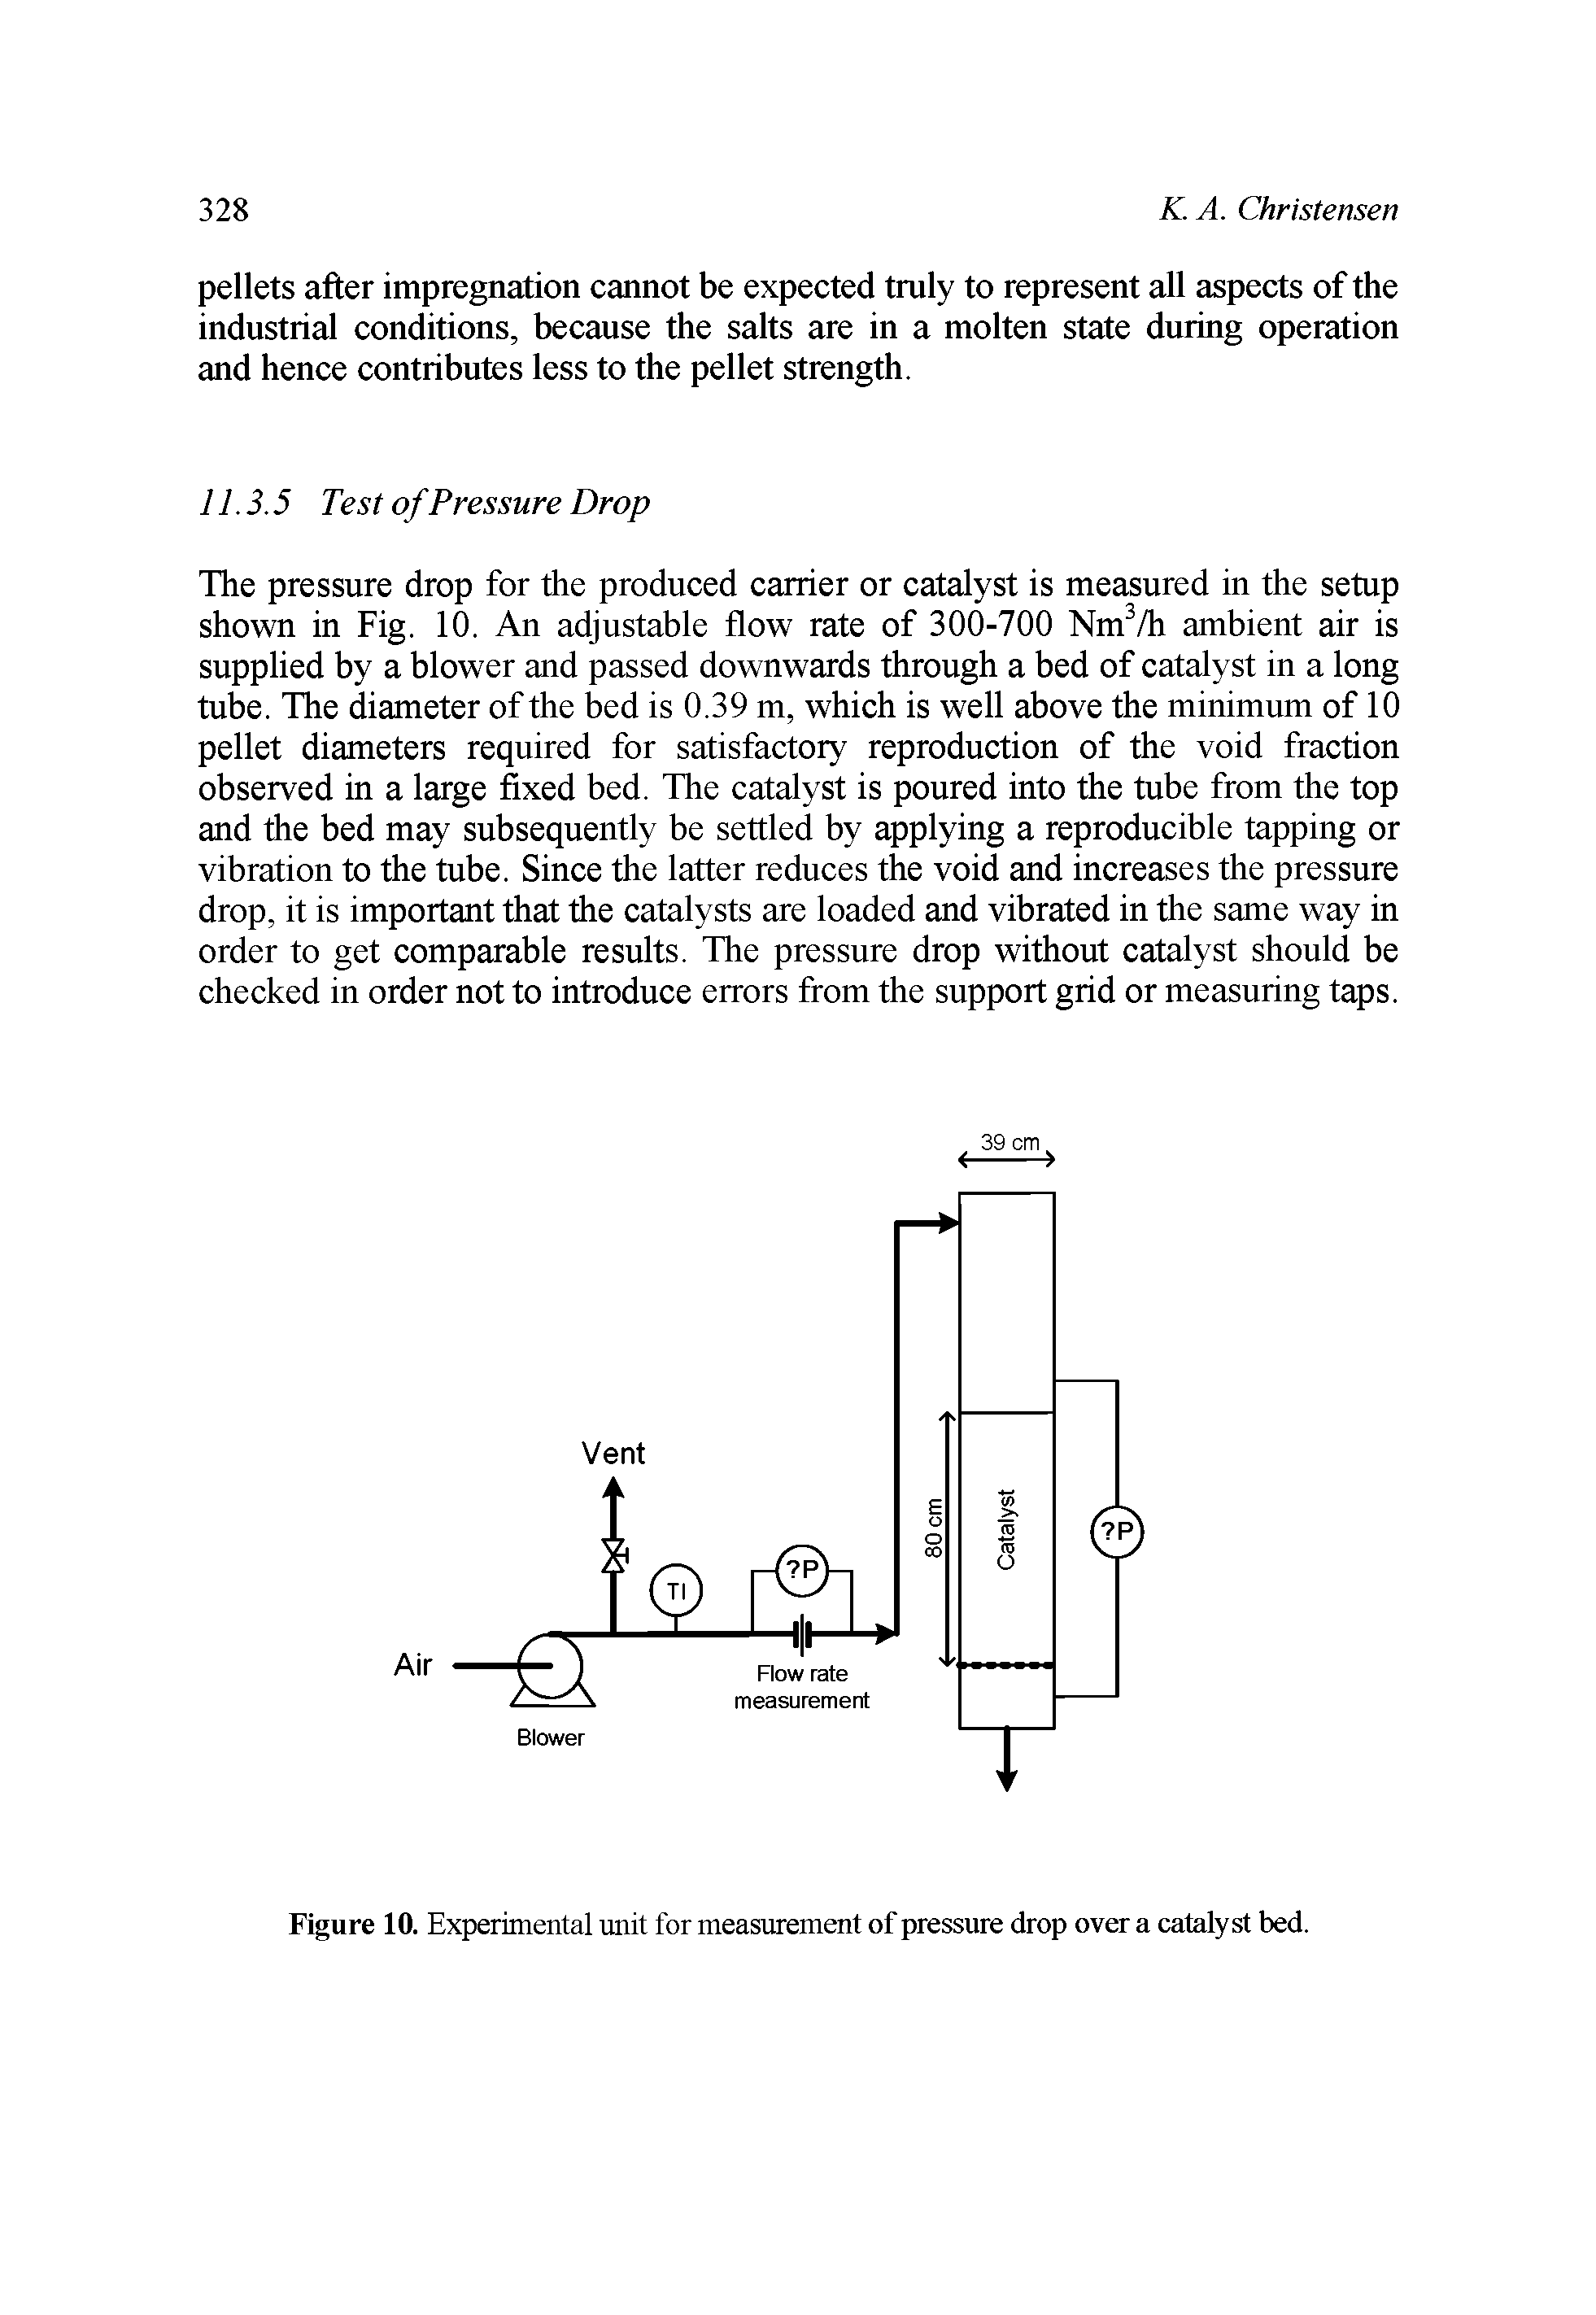 Figure 10. Experimental unit for measurement of pressure drop over a catalyst bed.